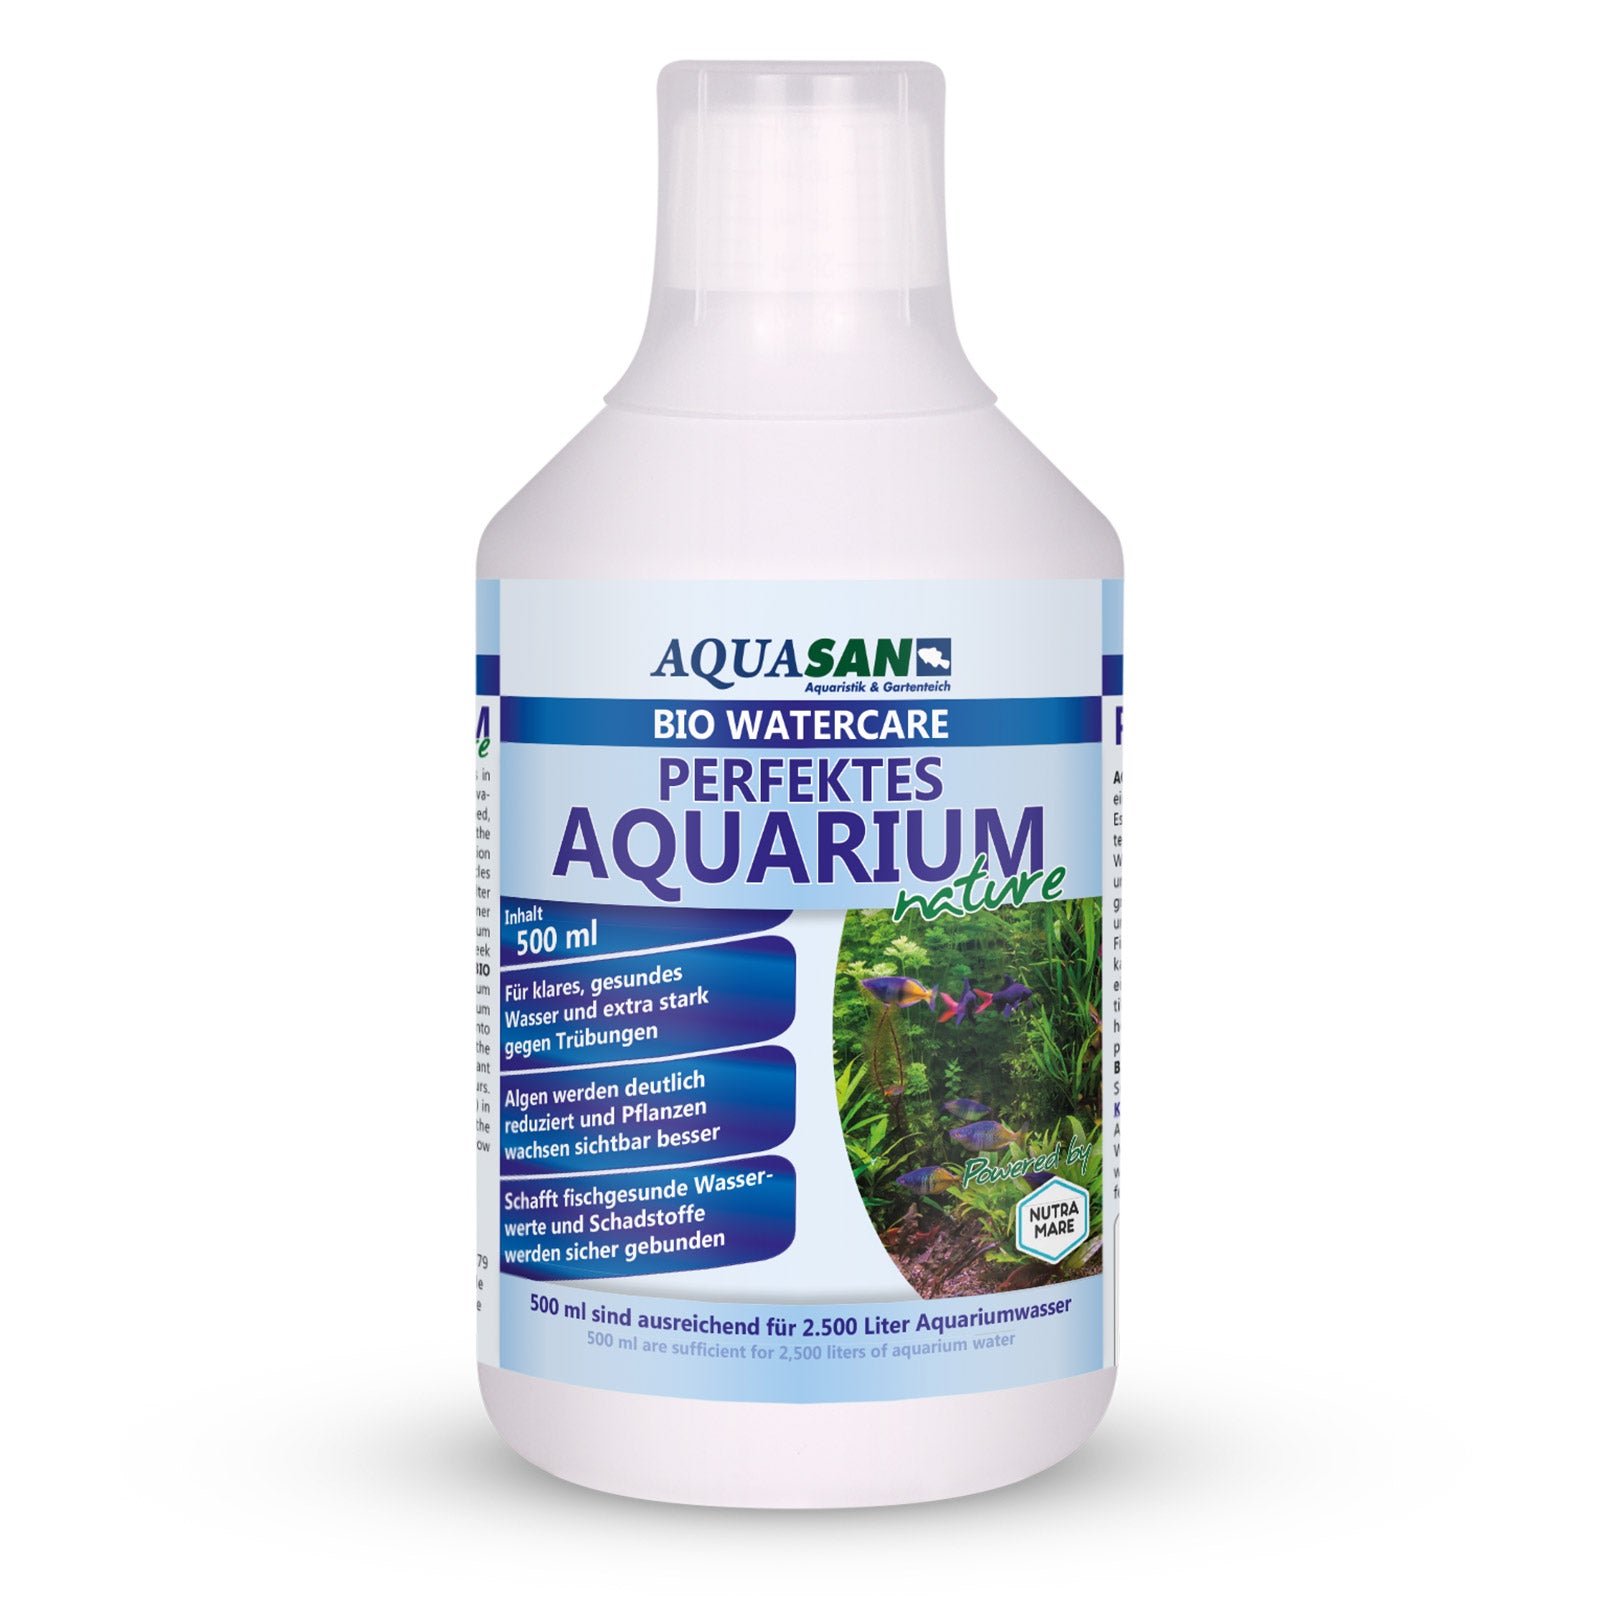 AQUASAN Perfektes Aquarium PLUS für Aquarien